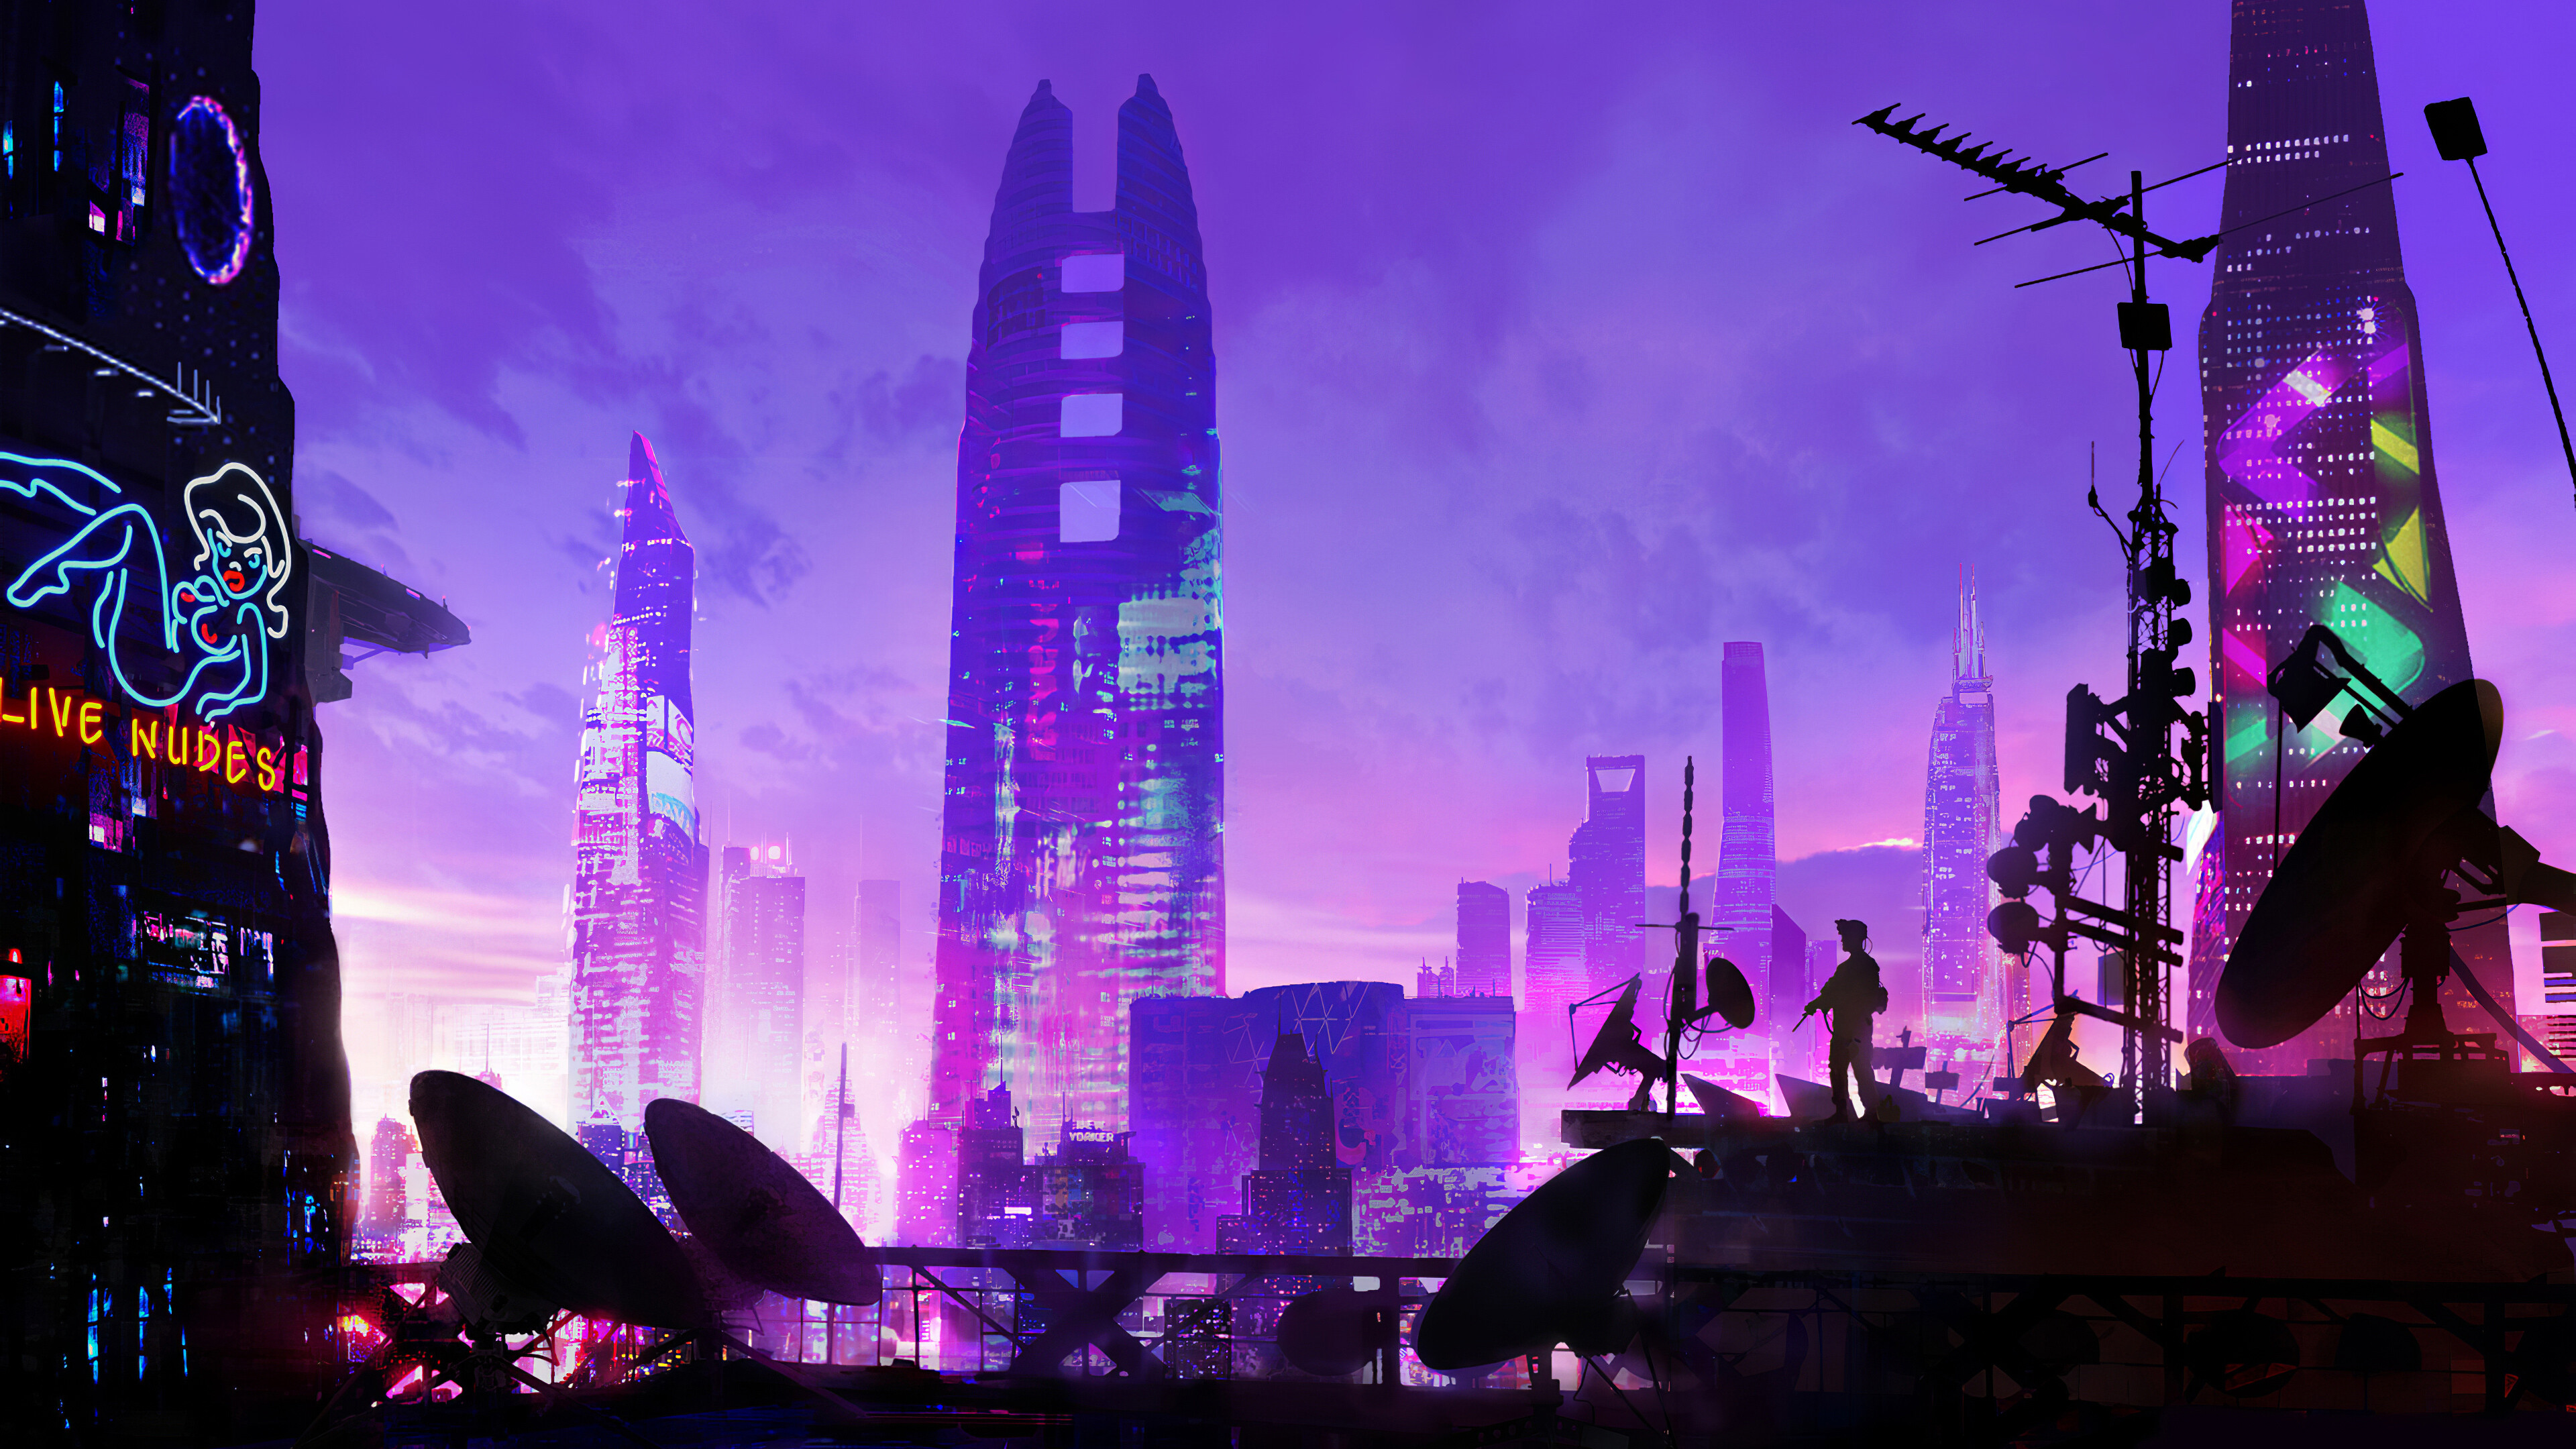 Free download Wallpaper Cyberpunk City Cyberpunk 2077 Cyberpunk Science